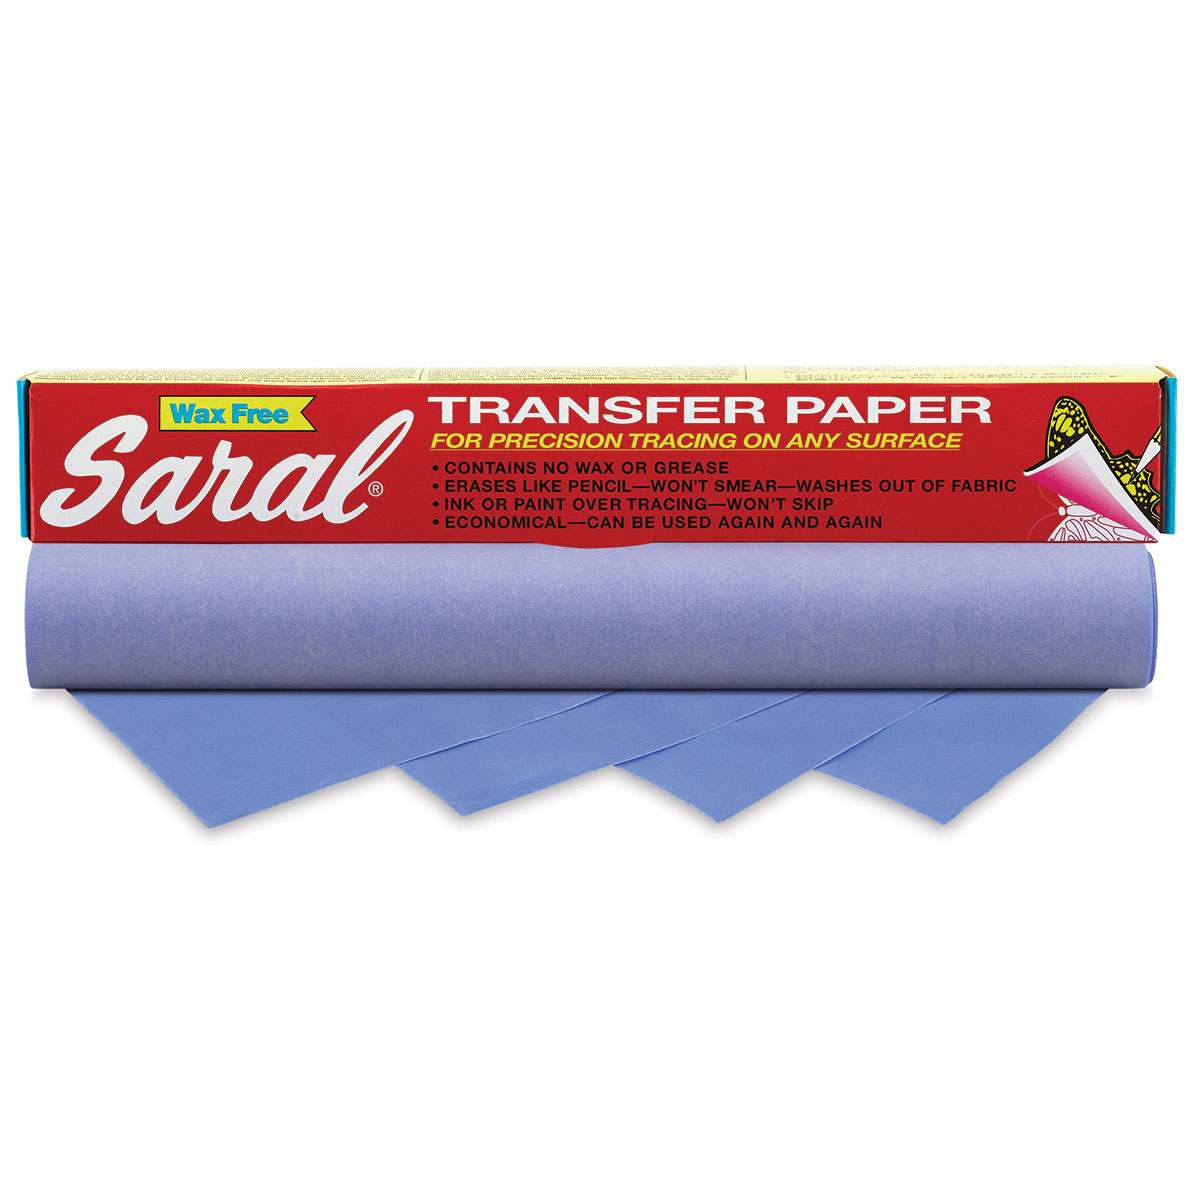 Saral Wax Free Transfer Paper - Graphite, BLICK Art Materials